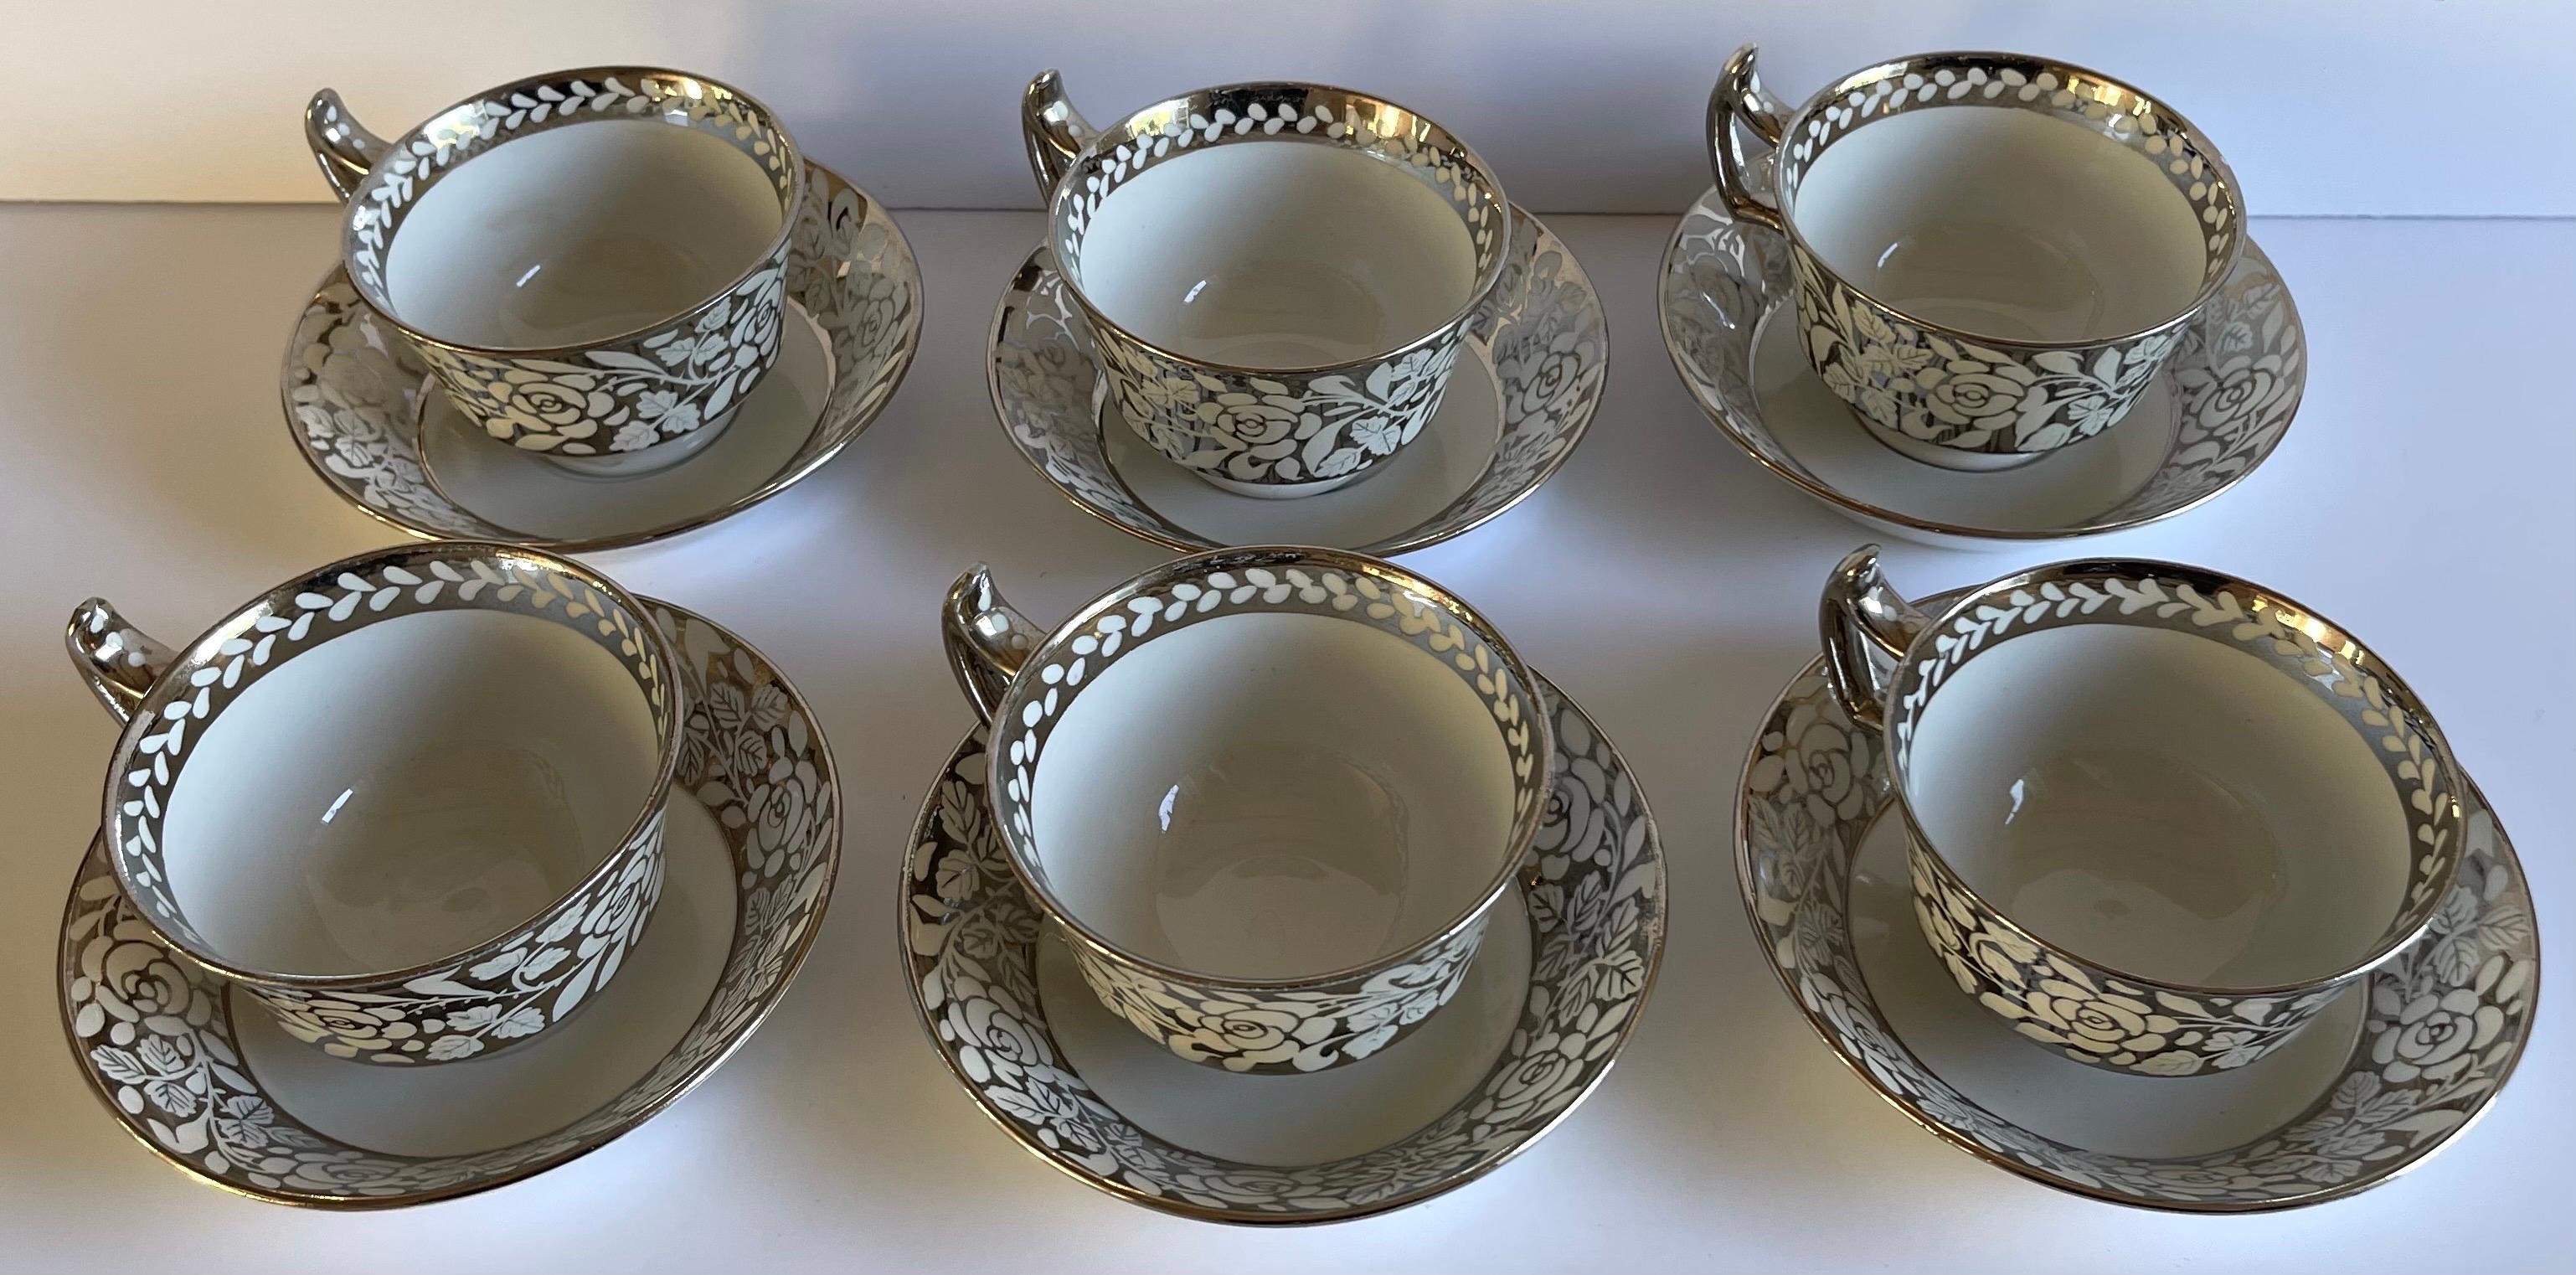 Edwardian 1930s Wedgwood Lustreware Tea Cups & Saucers, Set of 6 For Sale